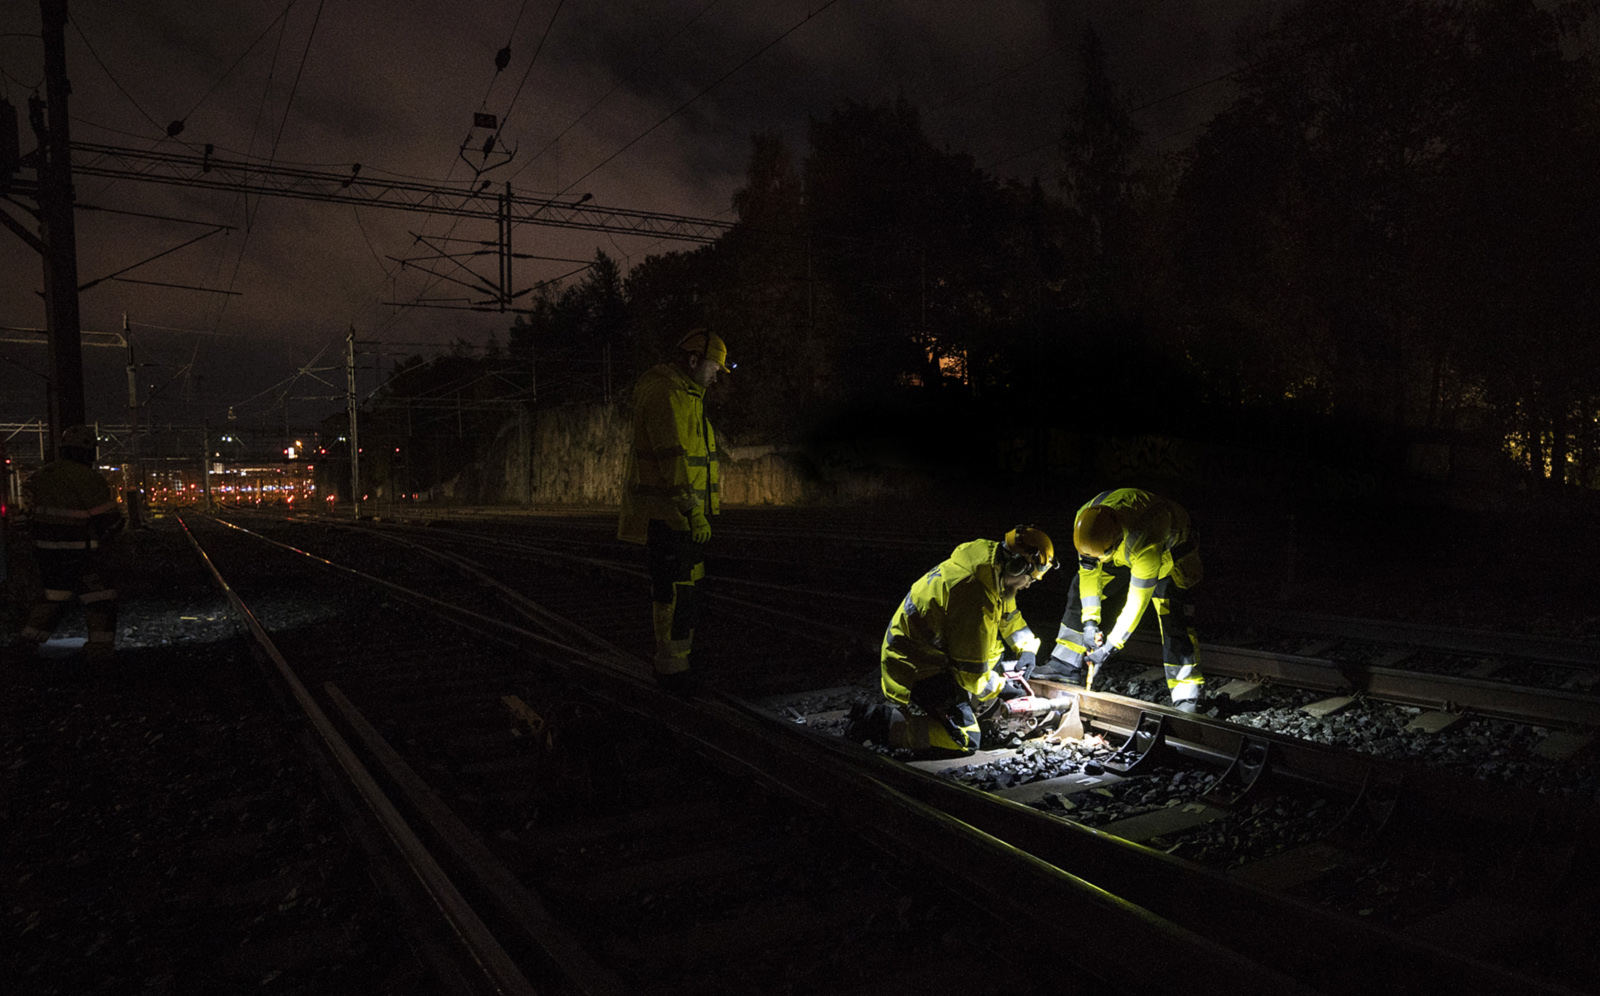 At night, workmen are renovating a railway line near the Helsinki Railway Station.